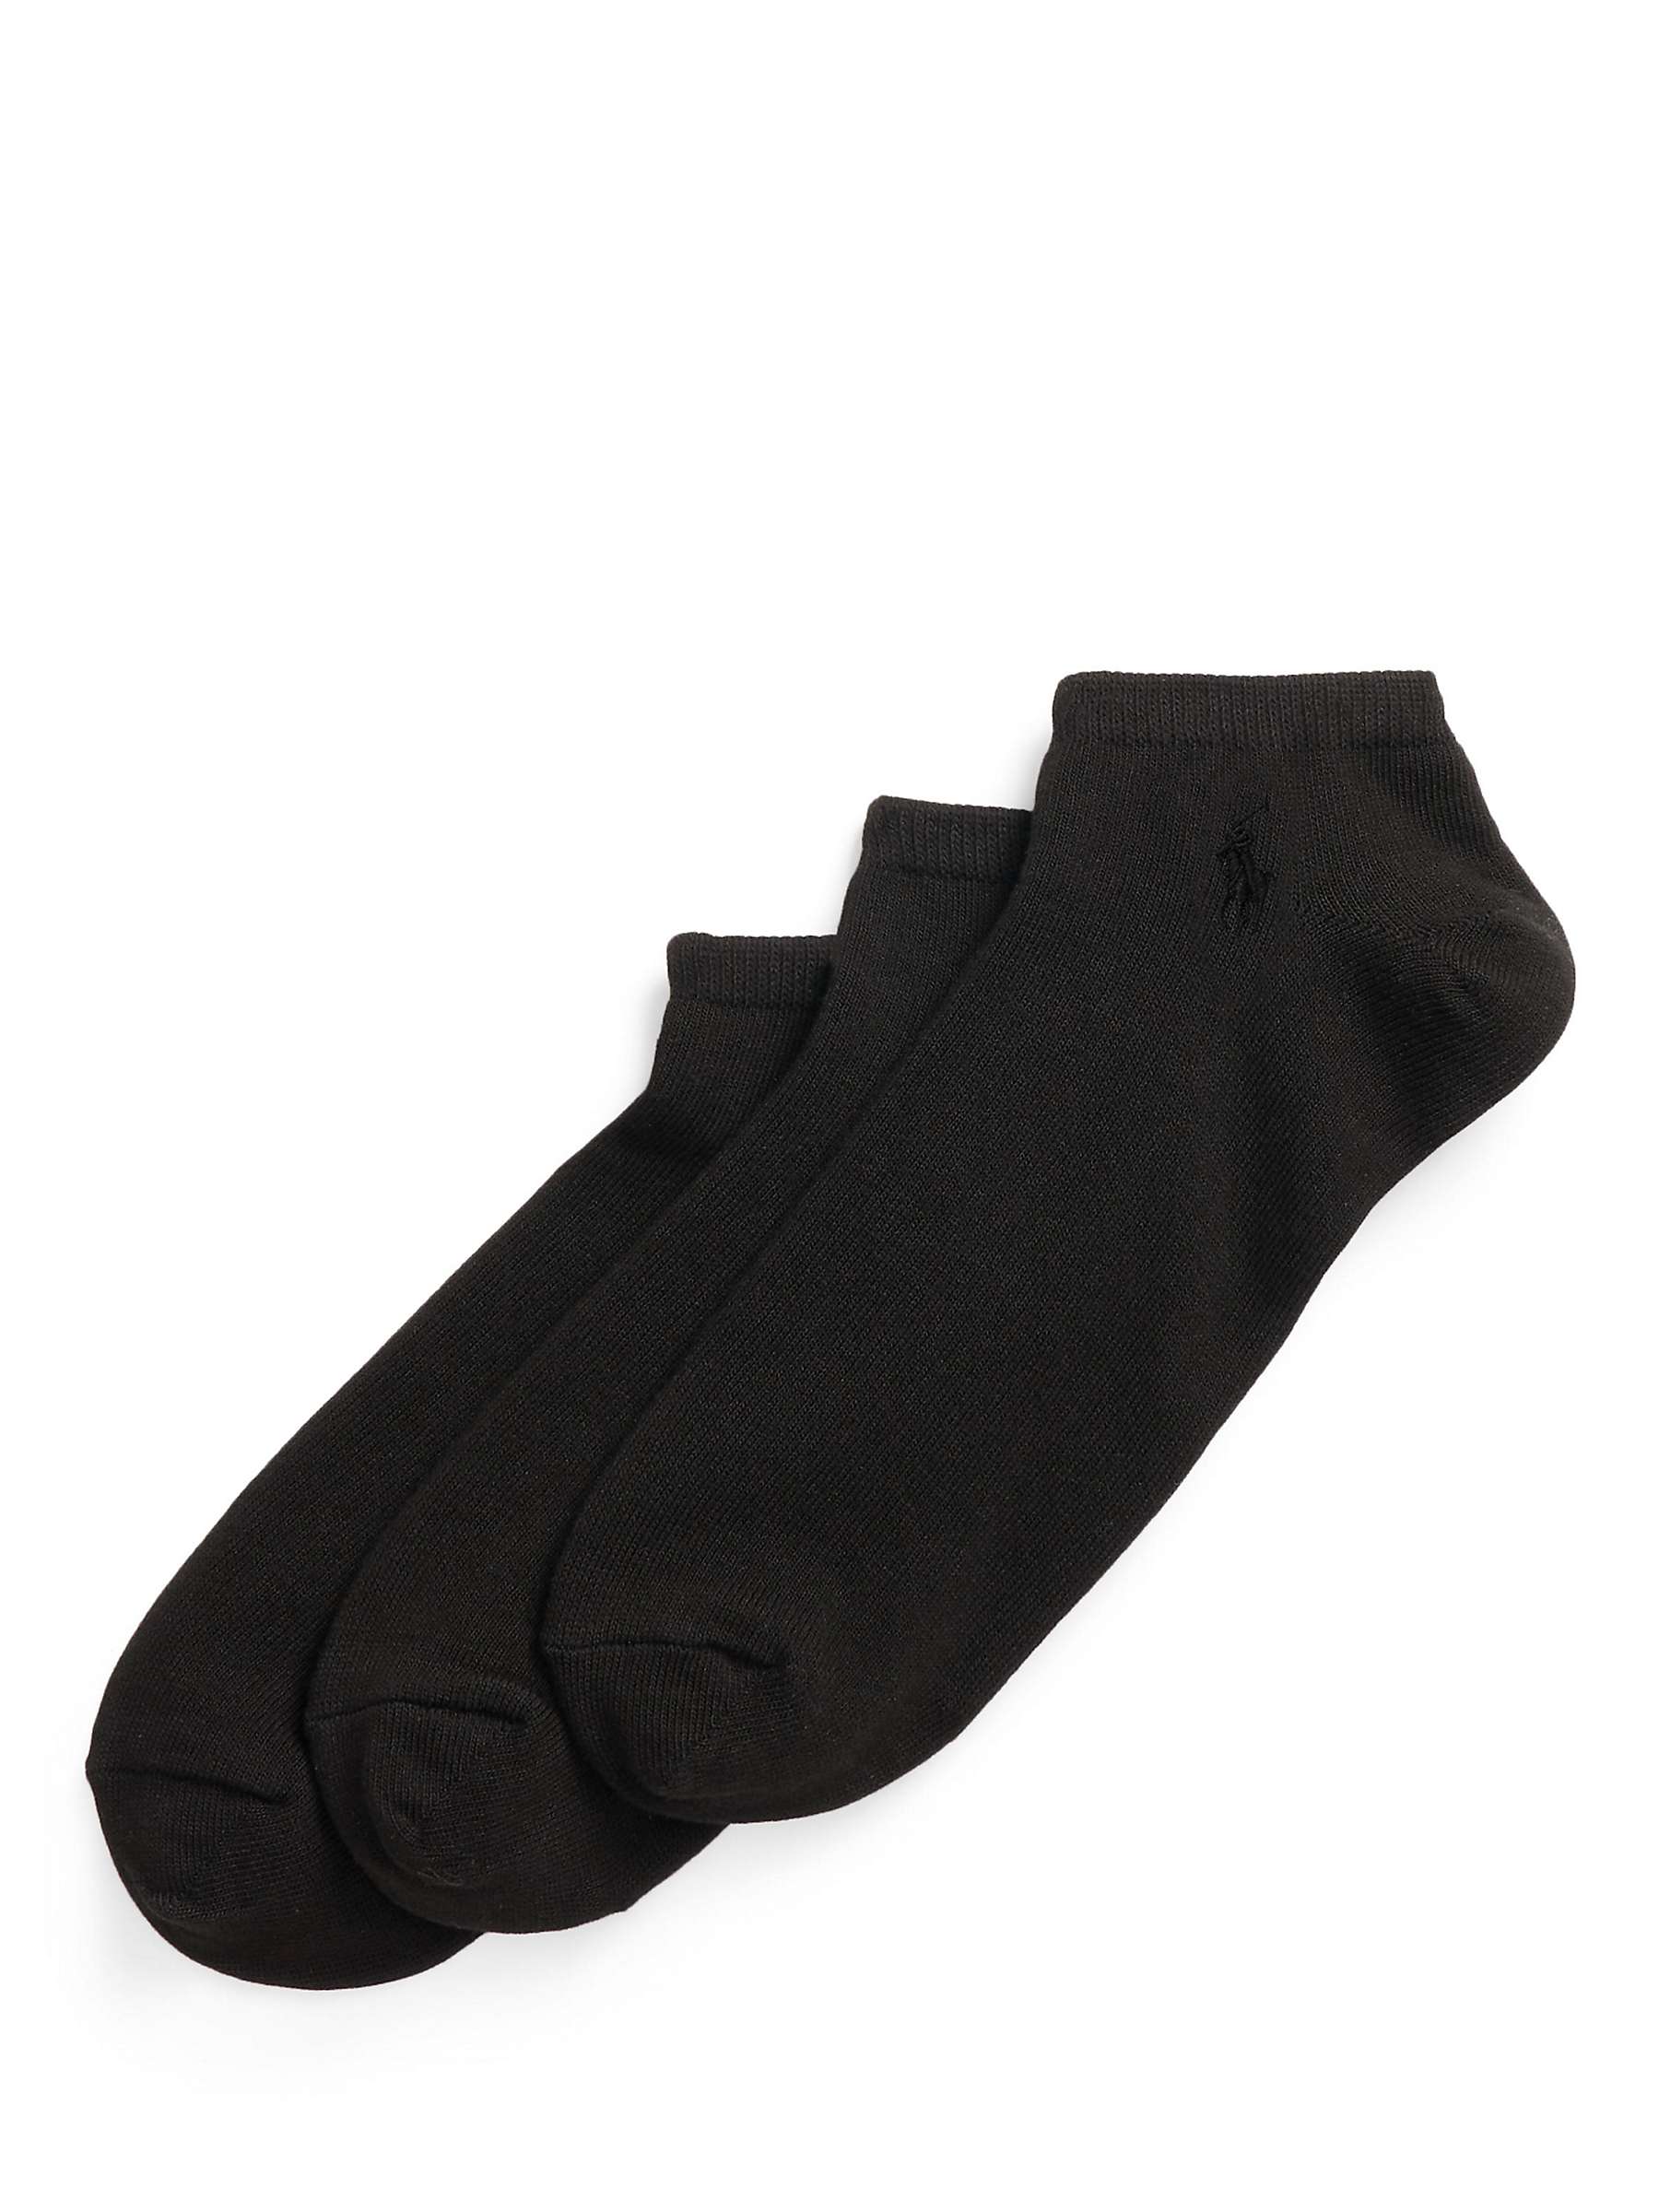 Buy Polo Ralph Lauren Low-Cut Ankle Socks, Pack of 3, Black Online at johnlewis.com